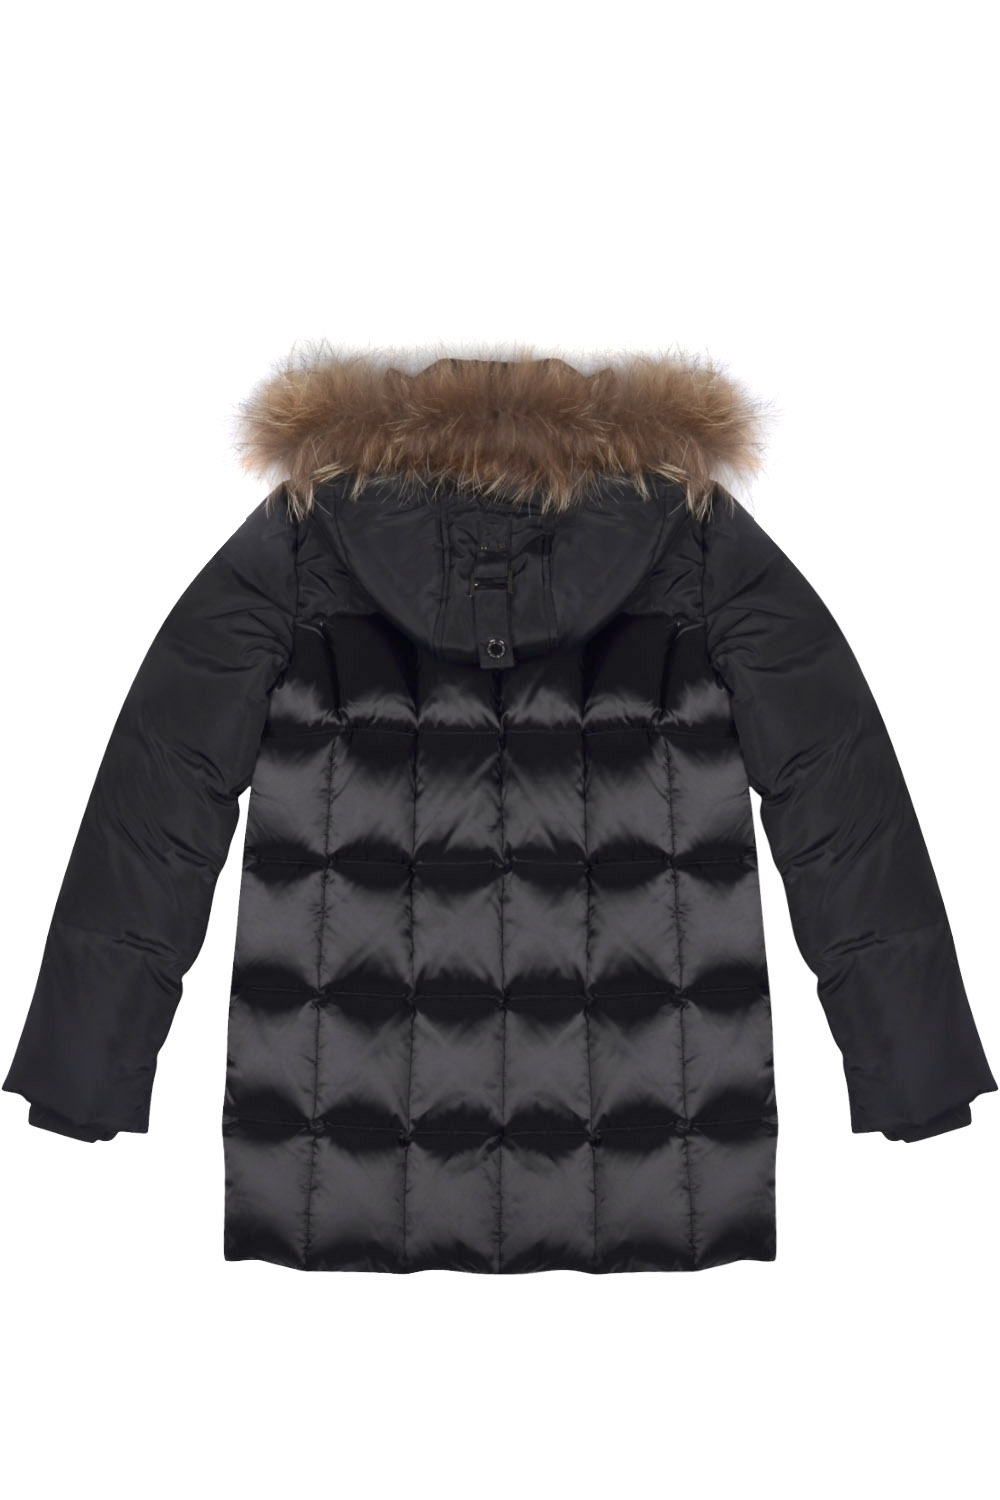 Куртка Noble People, размер 10, цвет черный 18607-450SP-Black - фото 2